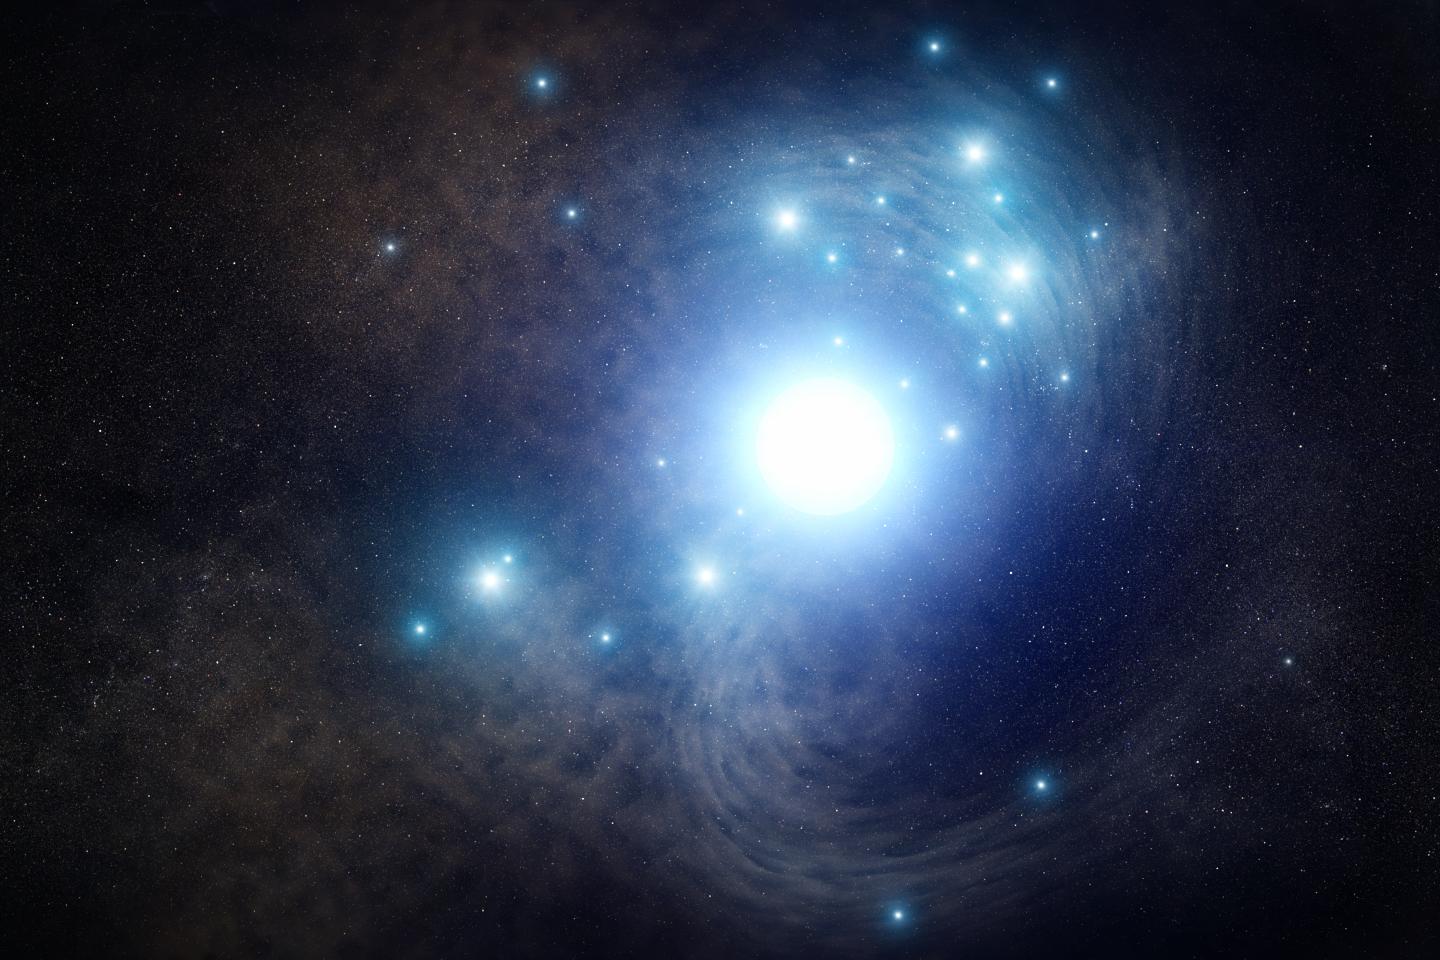 Artist's Impression of Progenitor Star to a Type Ic Supernova